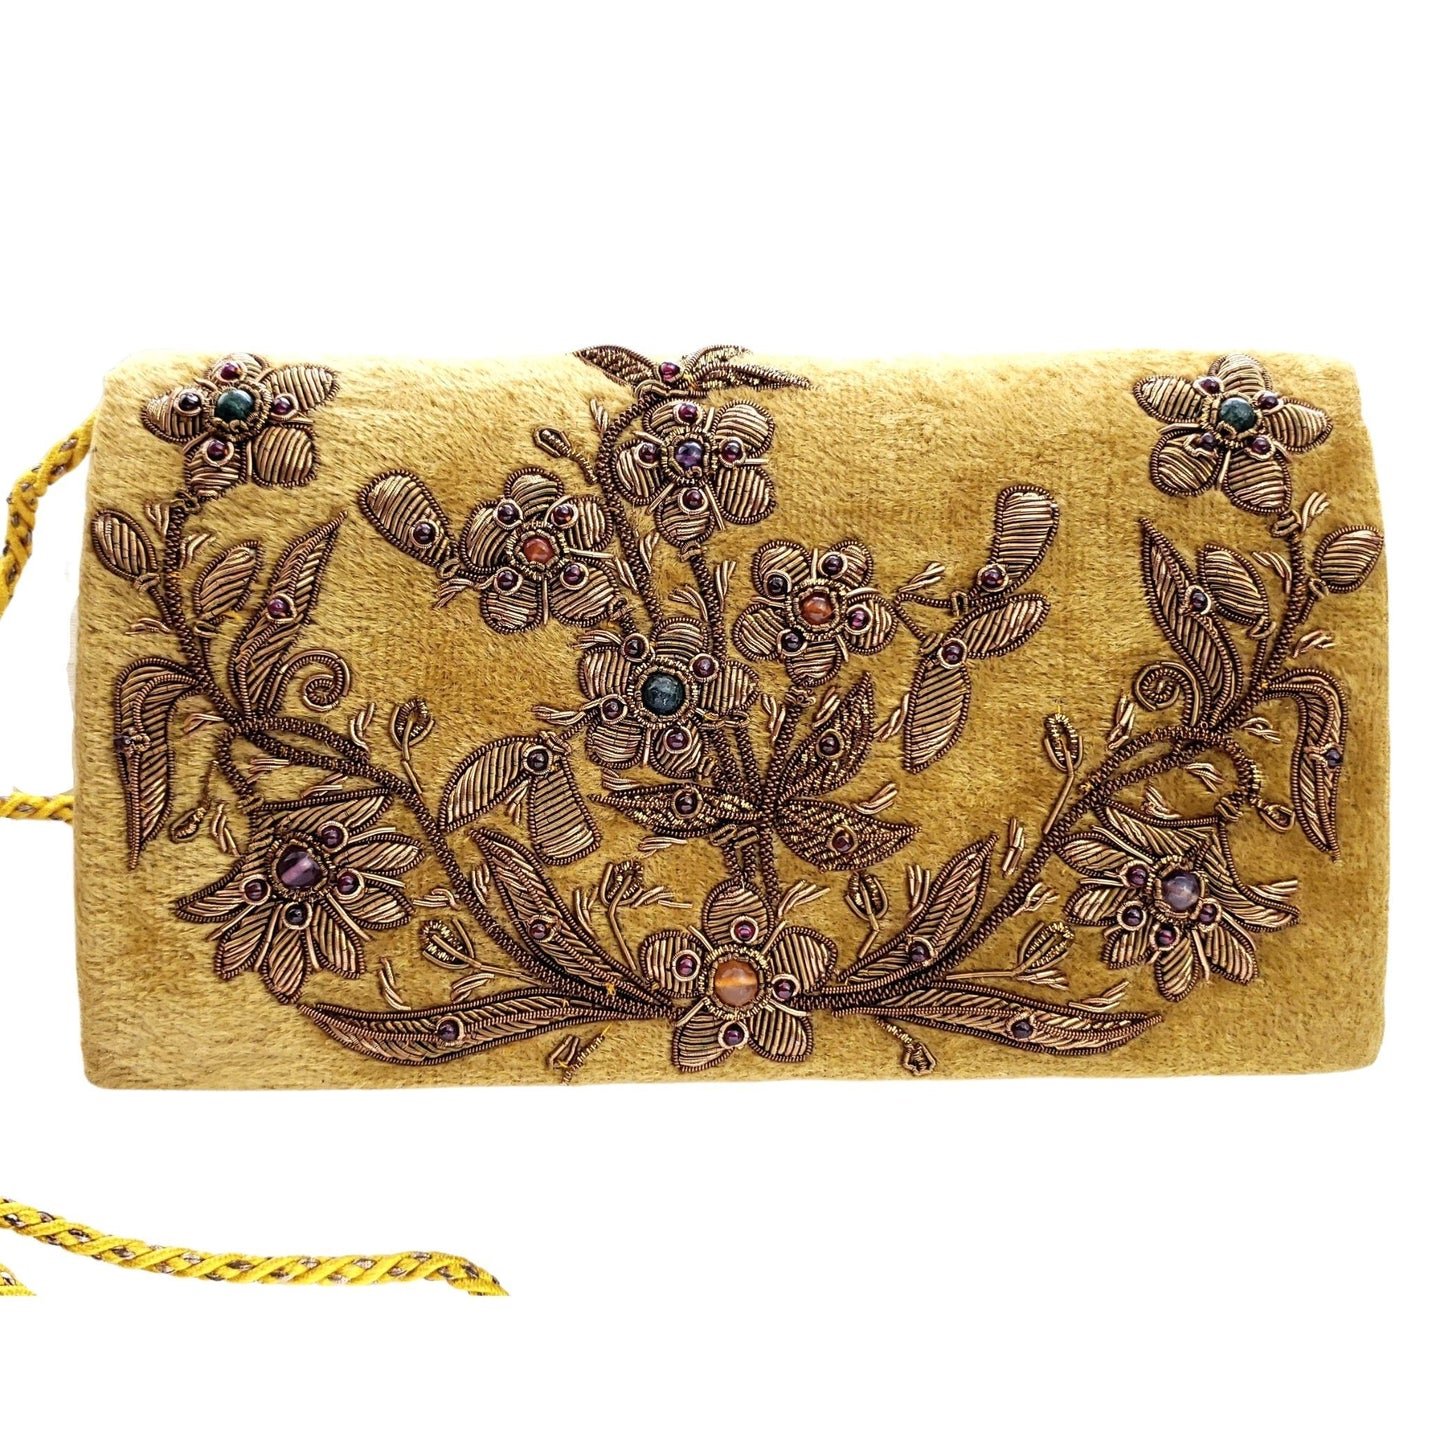 Gold velvet and bronze floral clutch bag BoutiqueByMariam. 